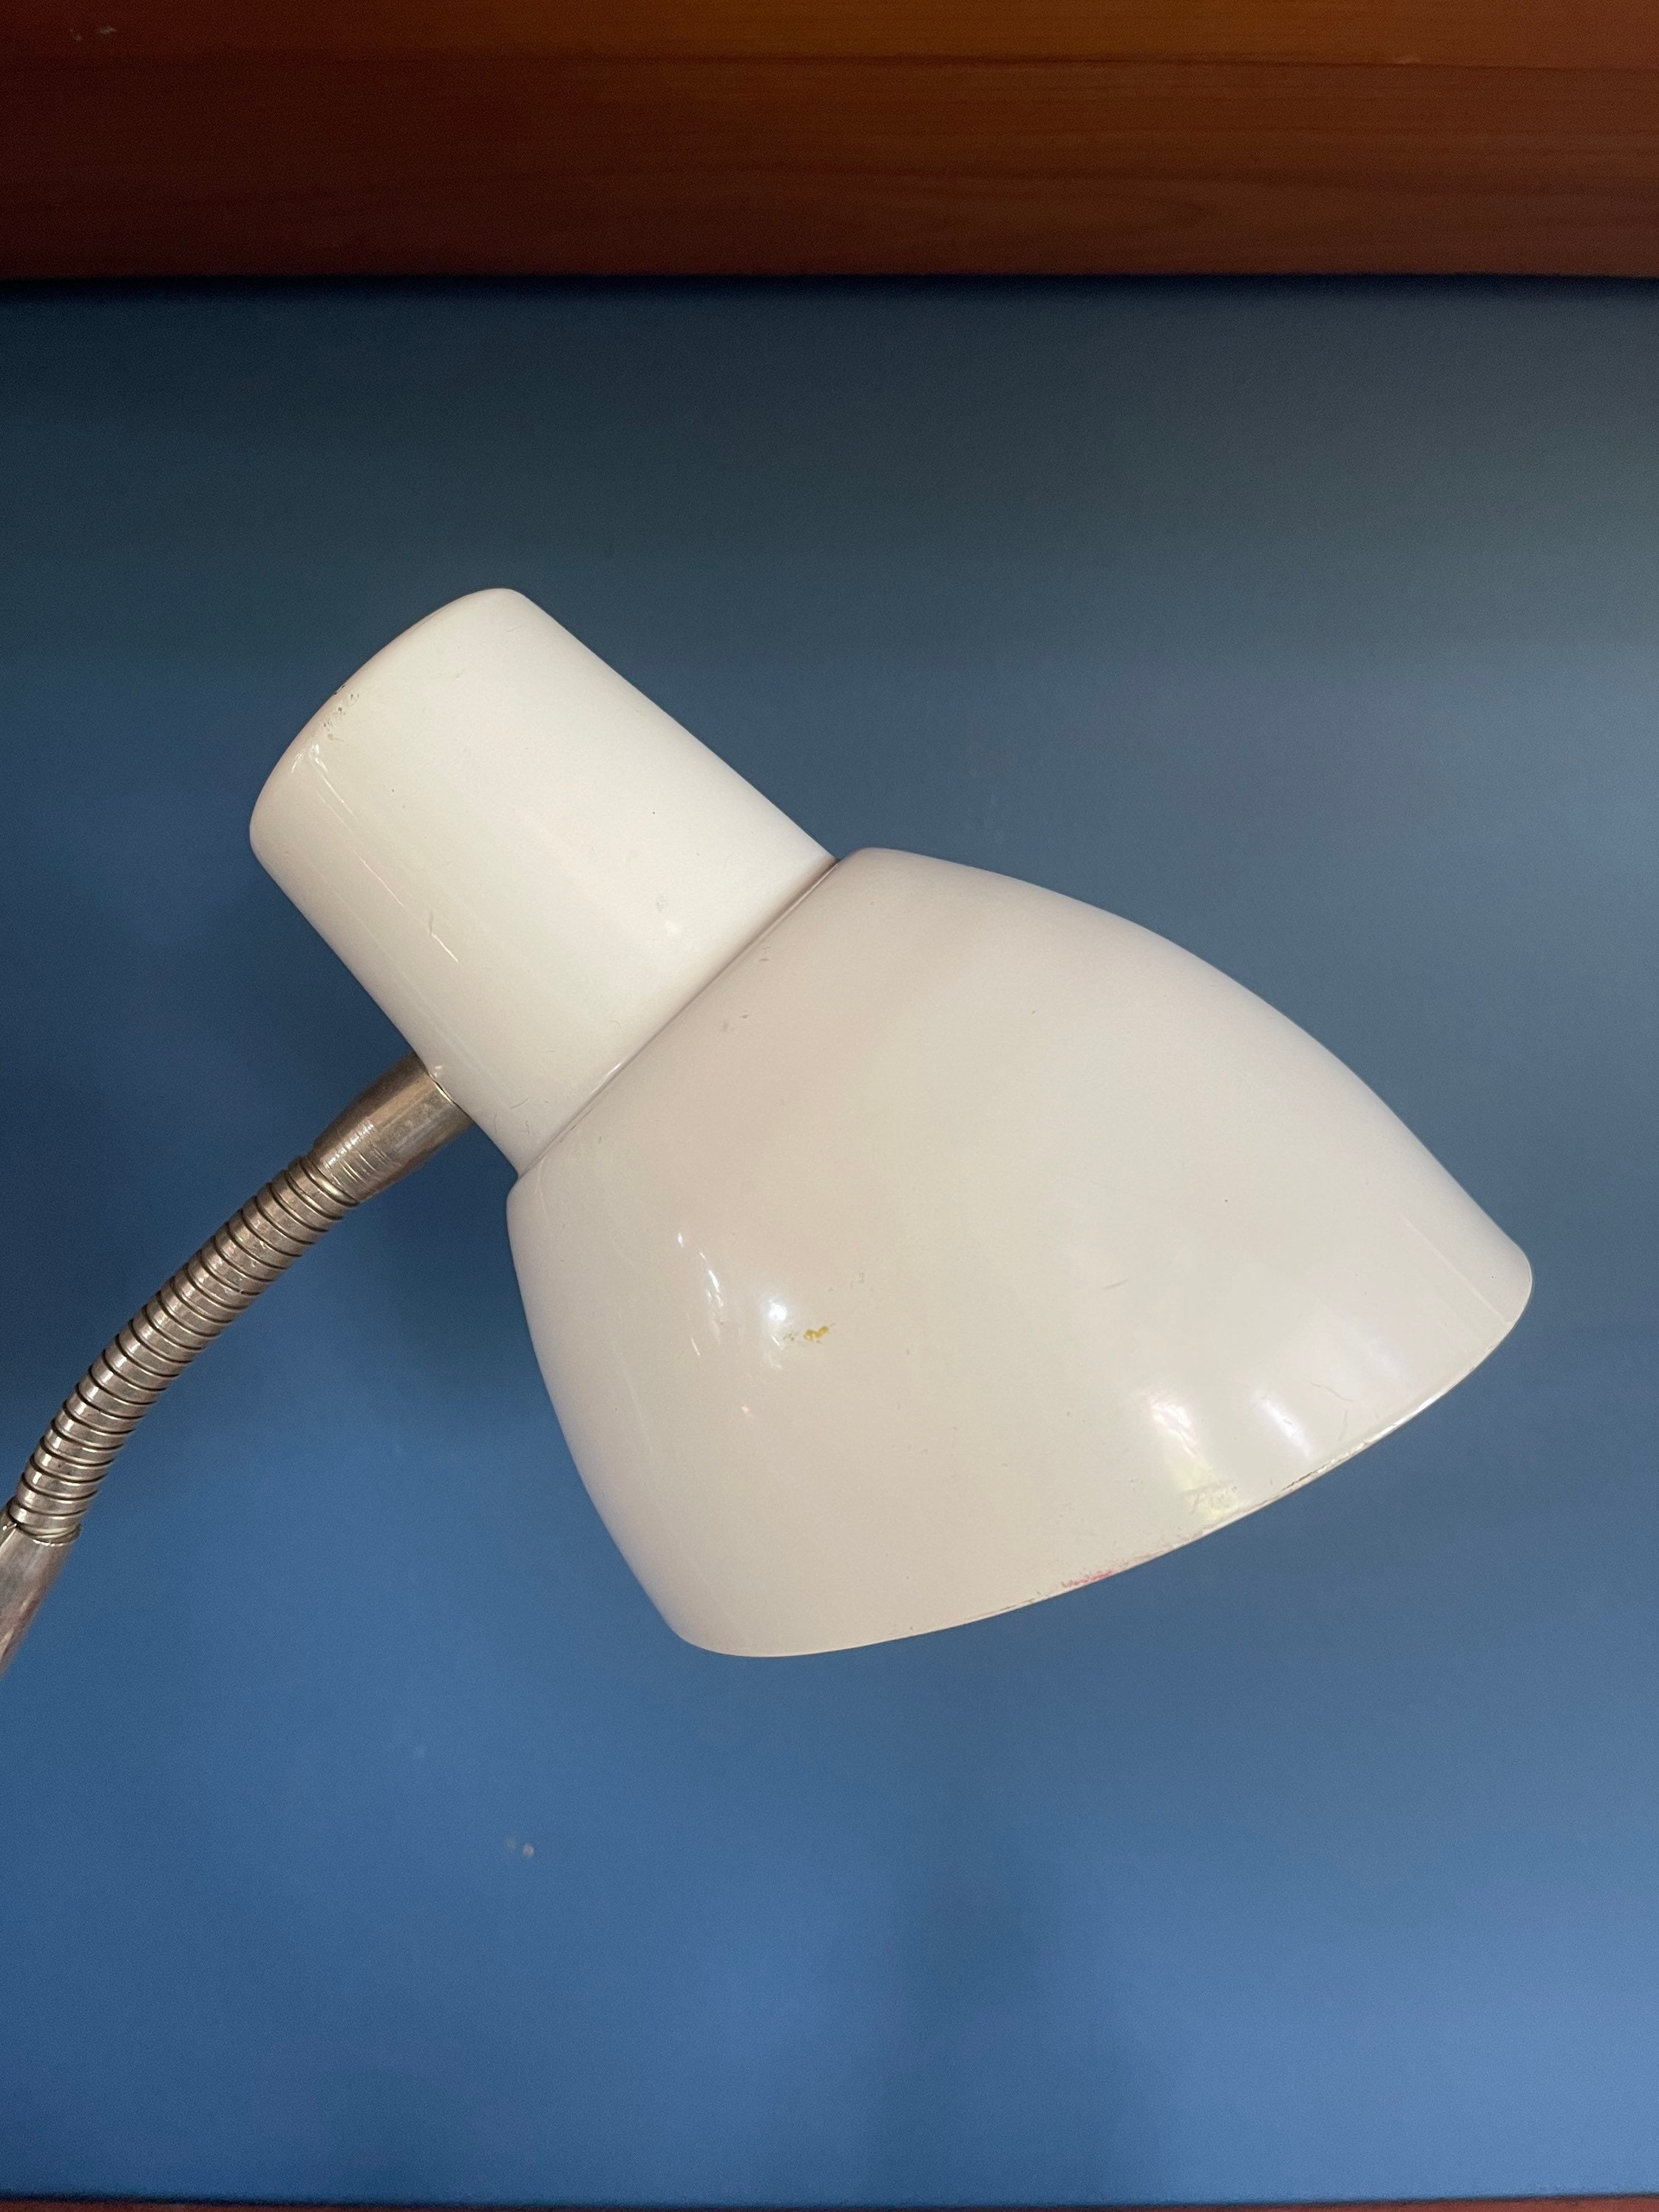 lampe de bureau avec port USB blanche - HEMA